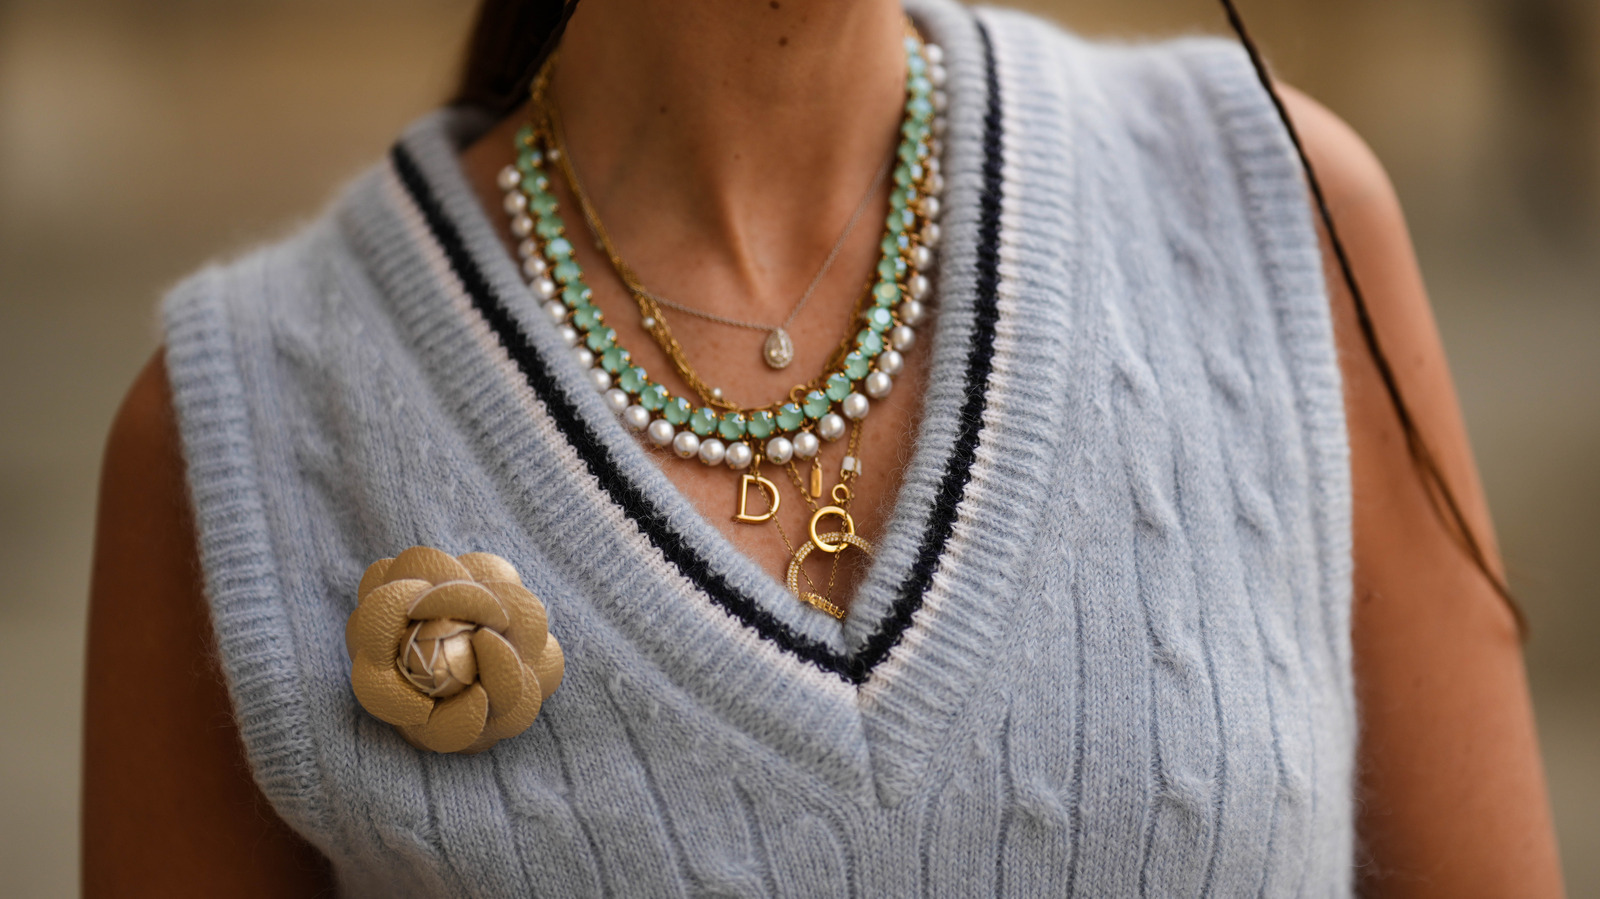 Jewelry Sweater Chain Fashion Necklace Pearl Flower Women Long Pendant  Elegant